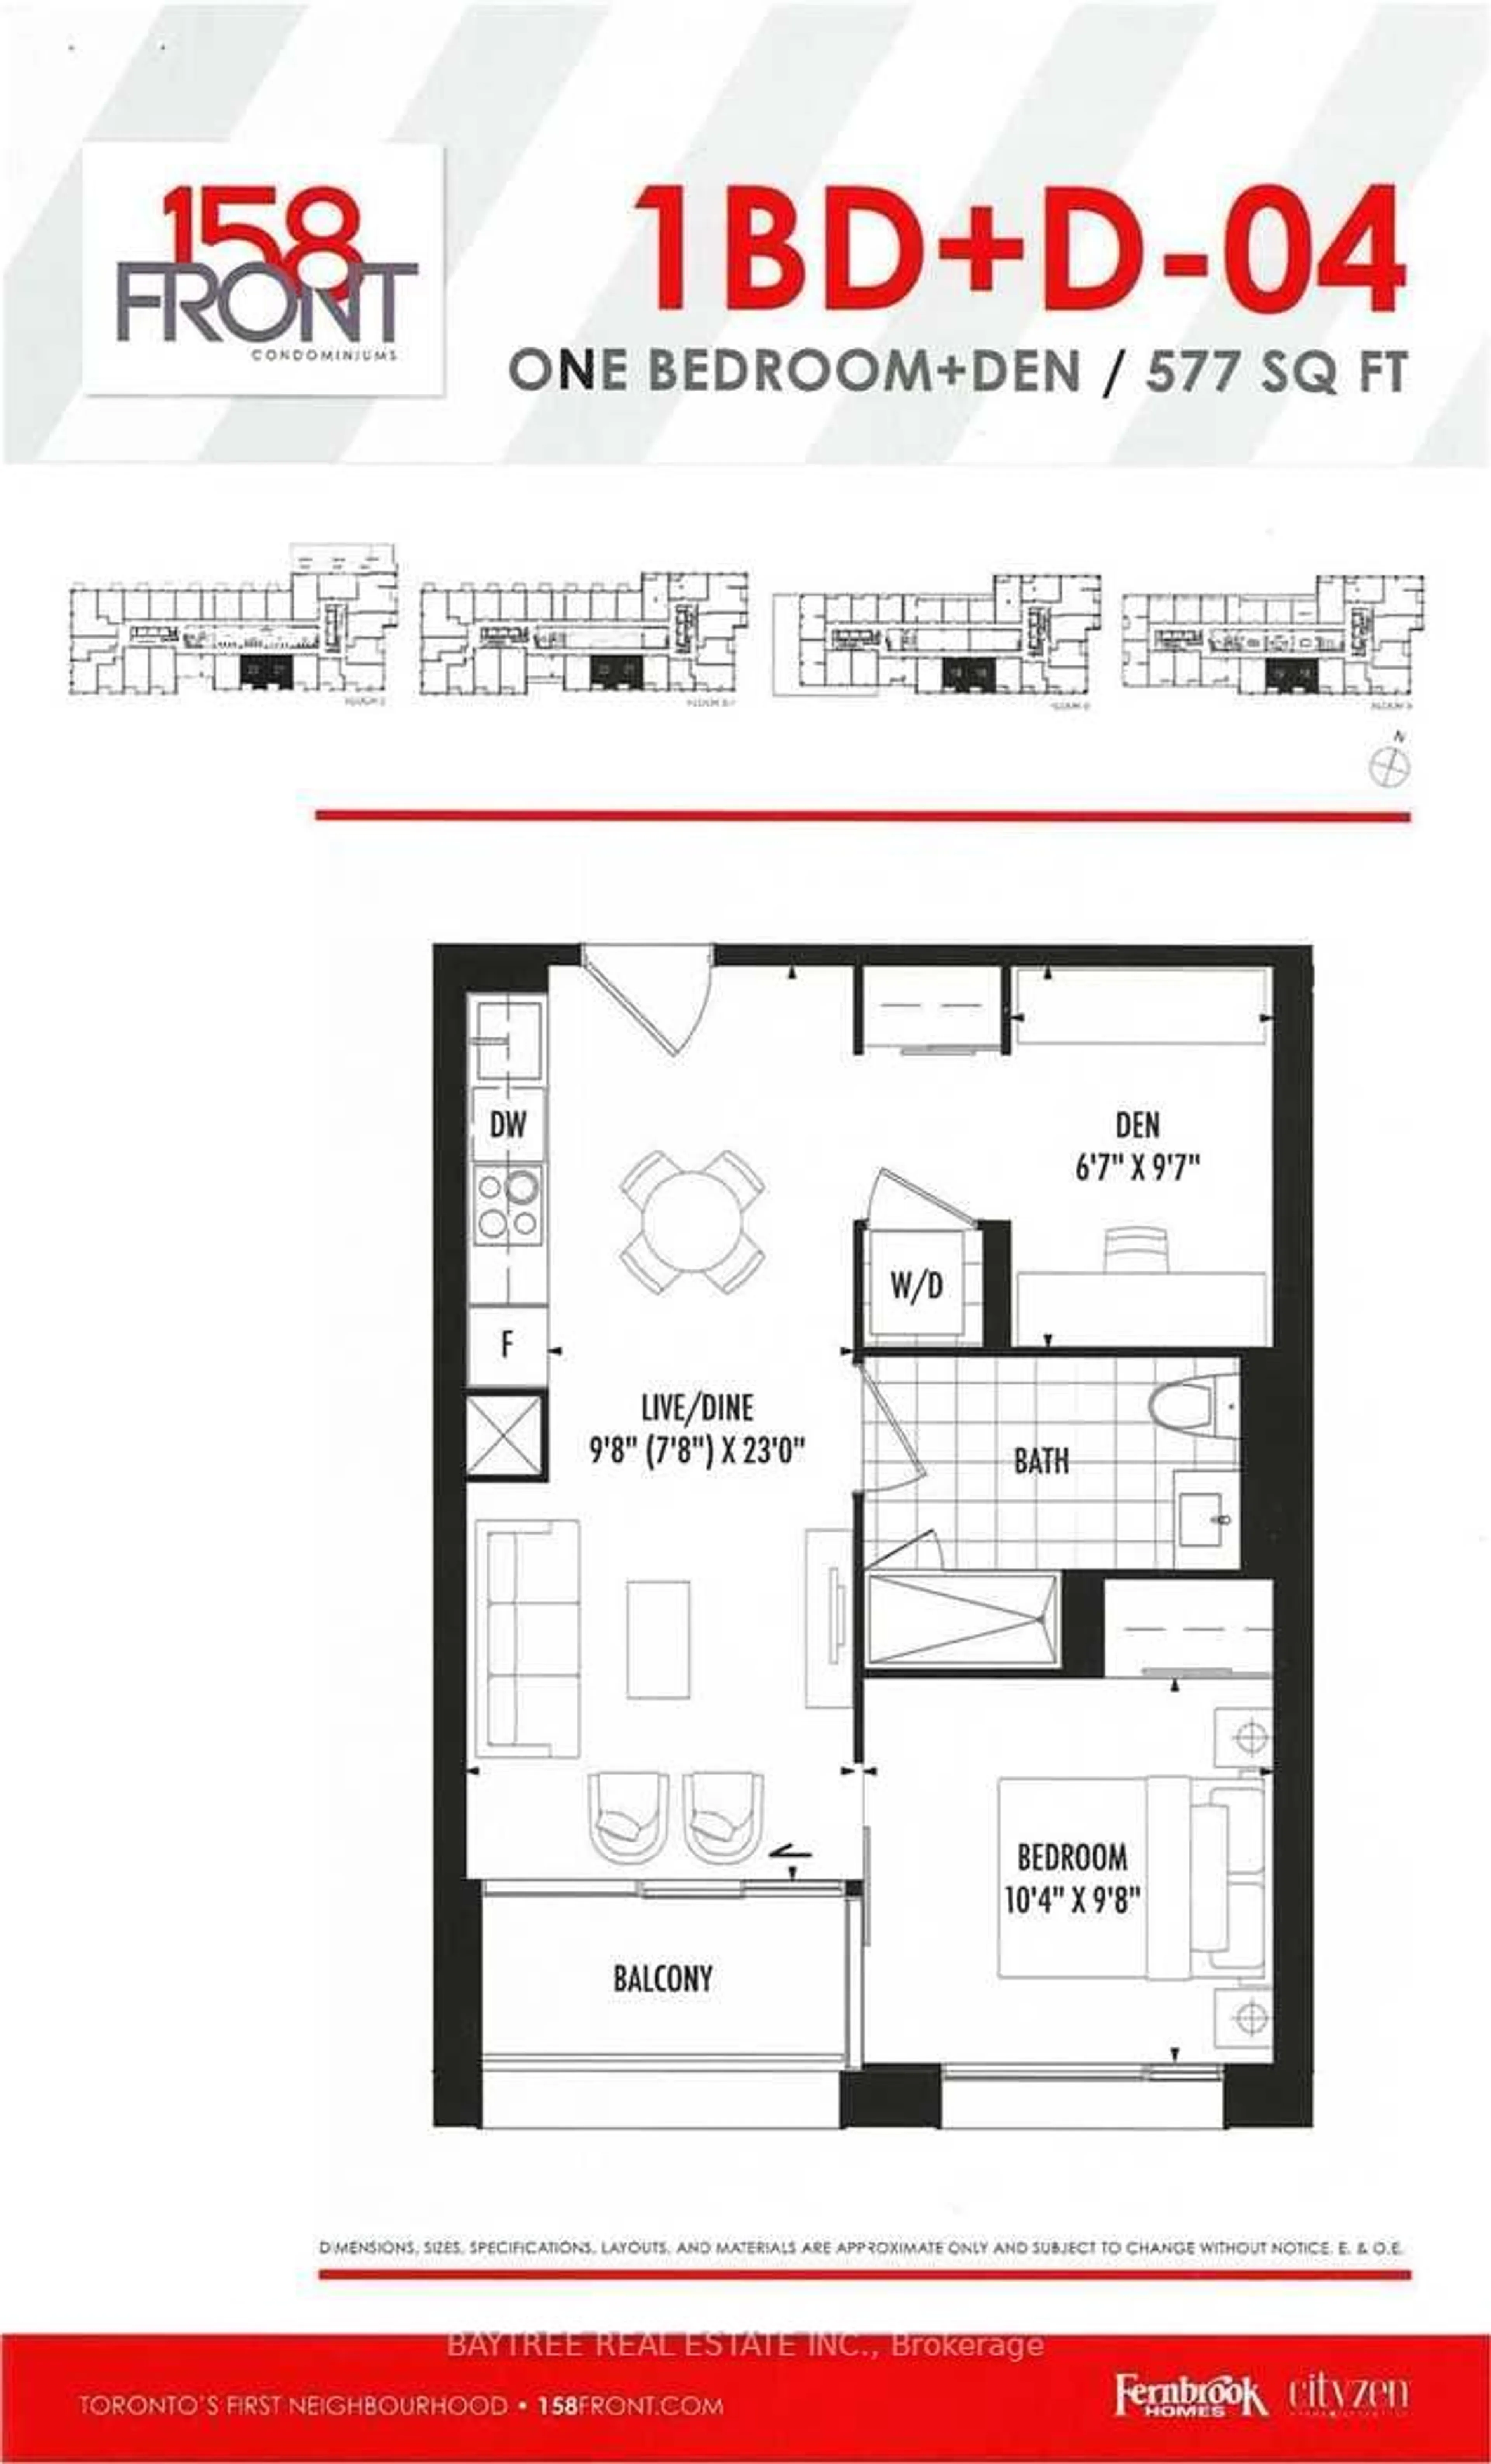 Floor plan for 158 Front St #521, Toronto Ontario M5J 2L6